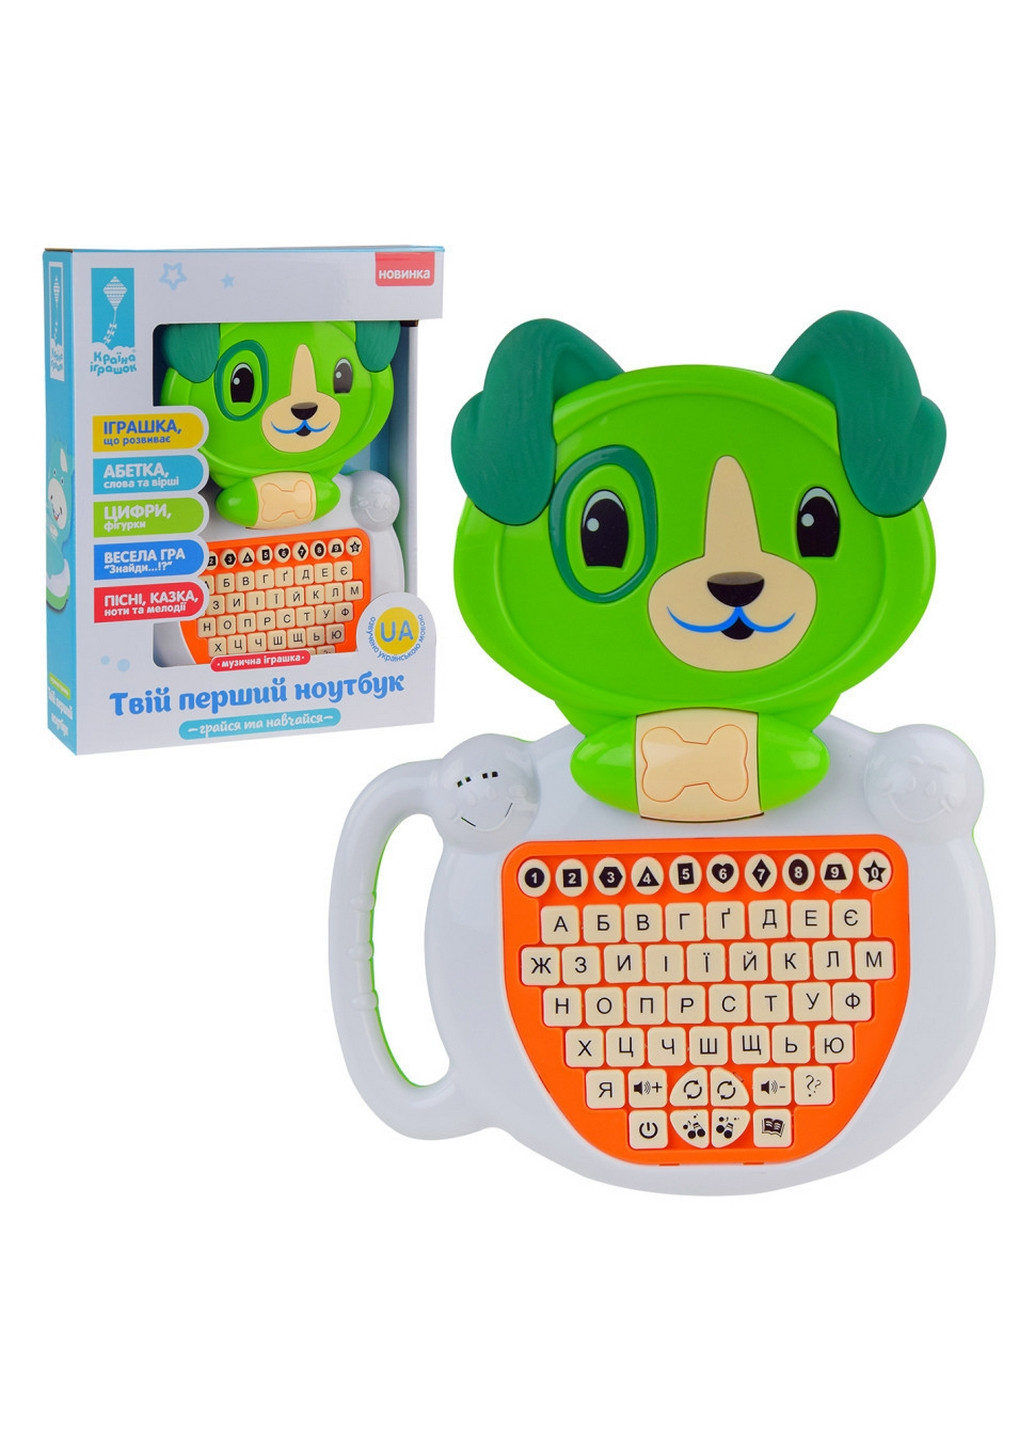 Детский ноутбук Собачка на украинском языке 7х25,5х20,5 см Країна іграшок (260530115)